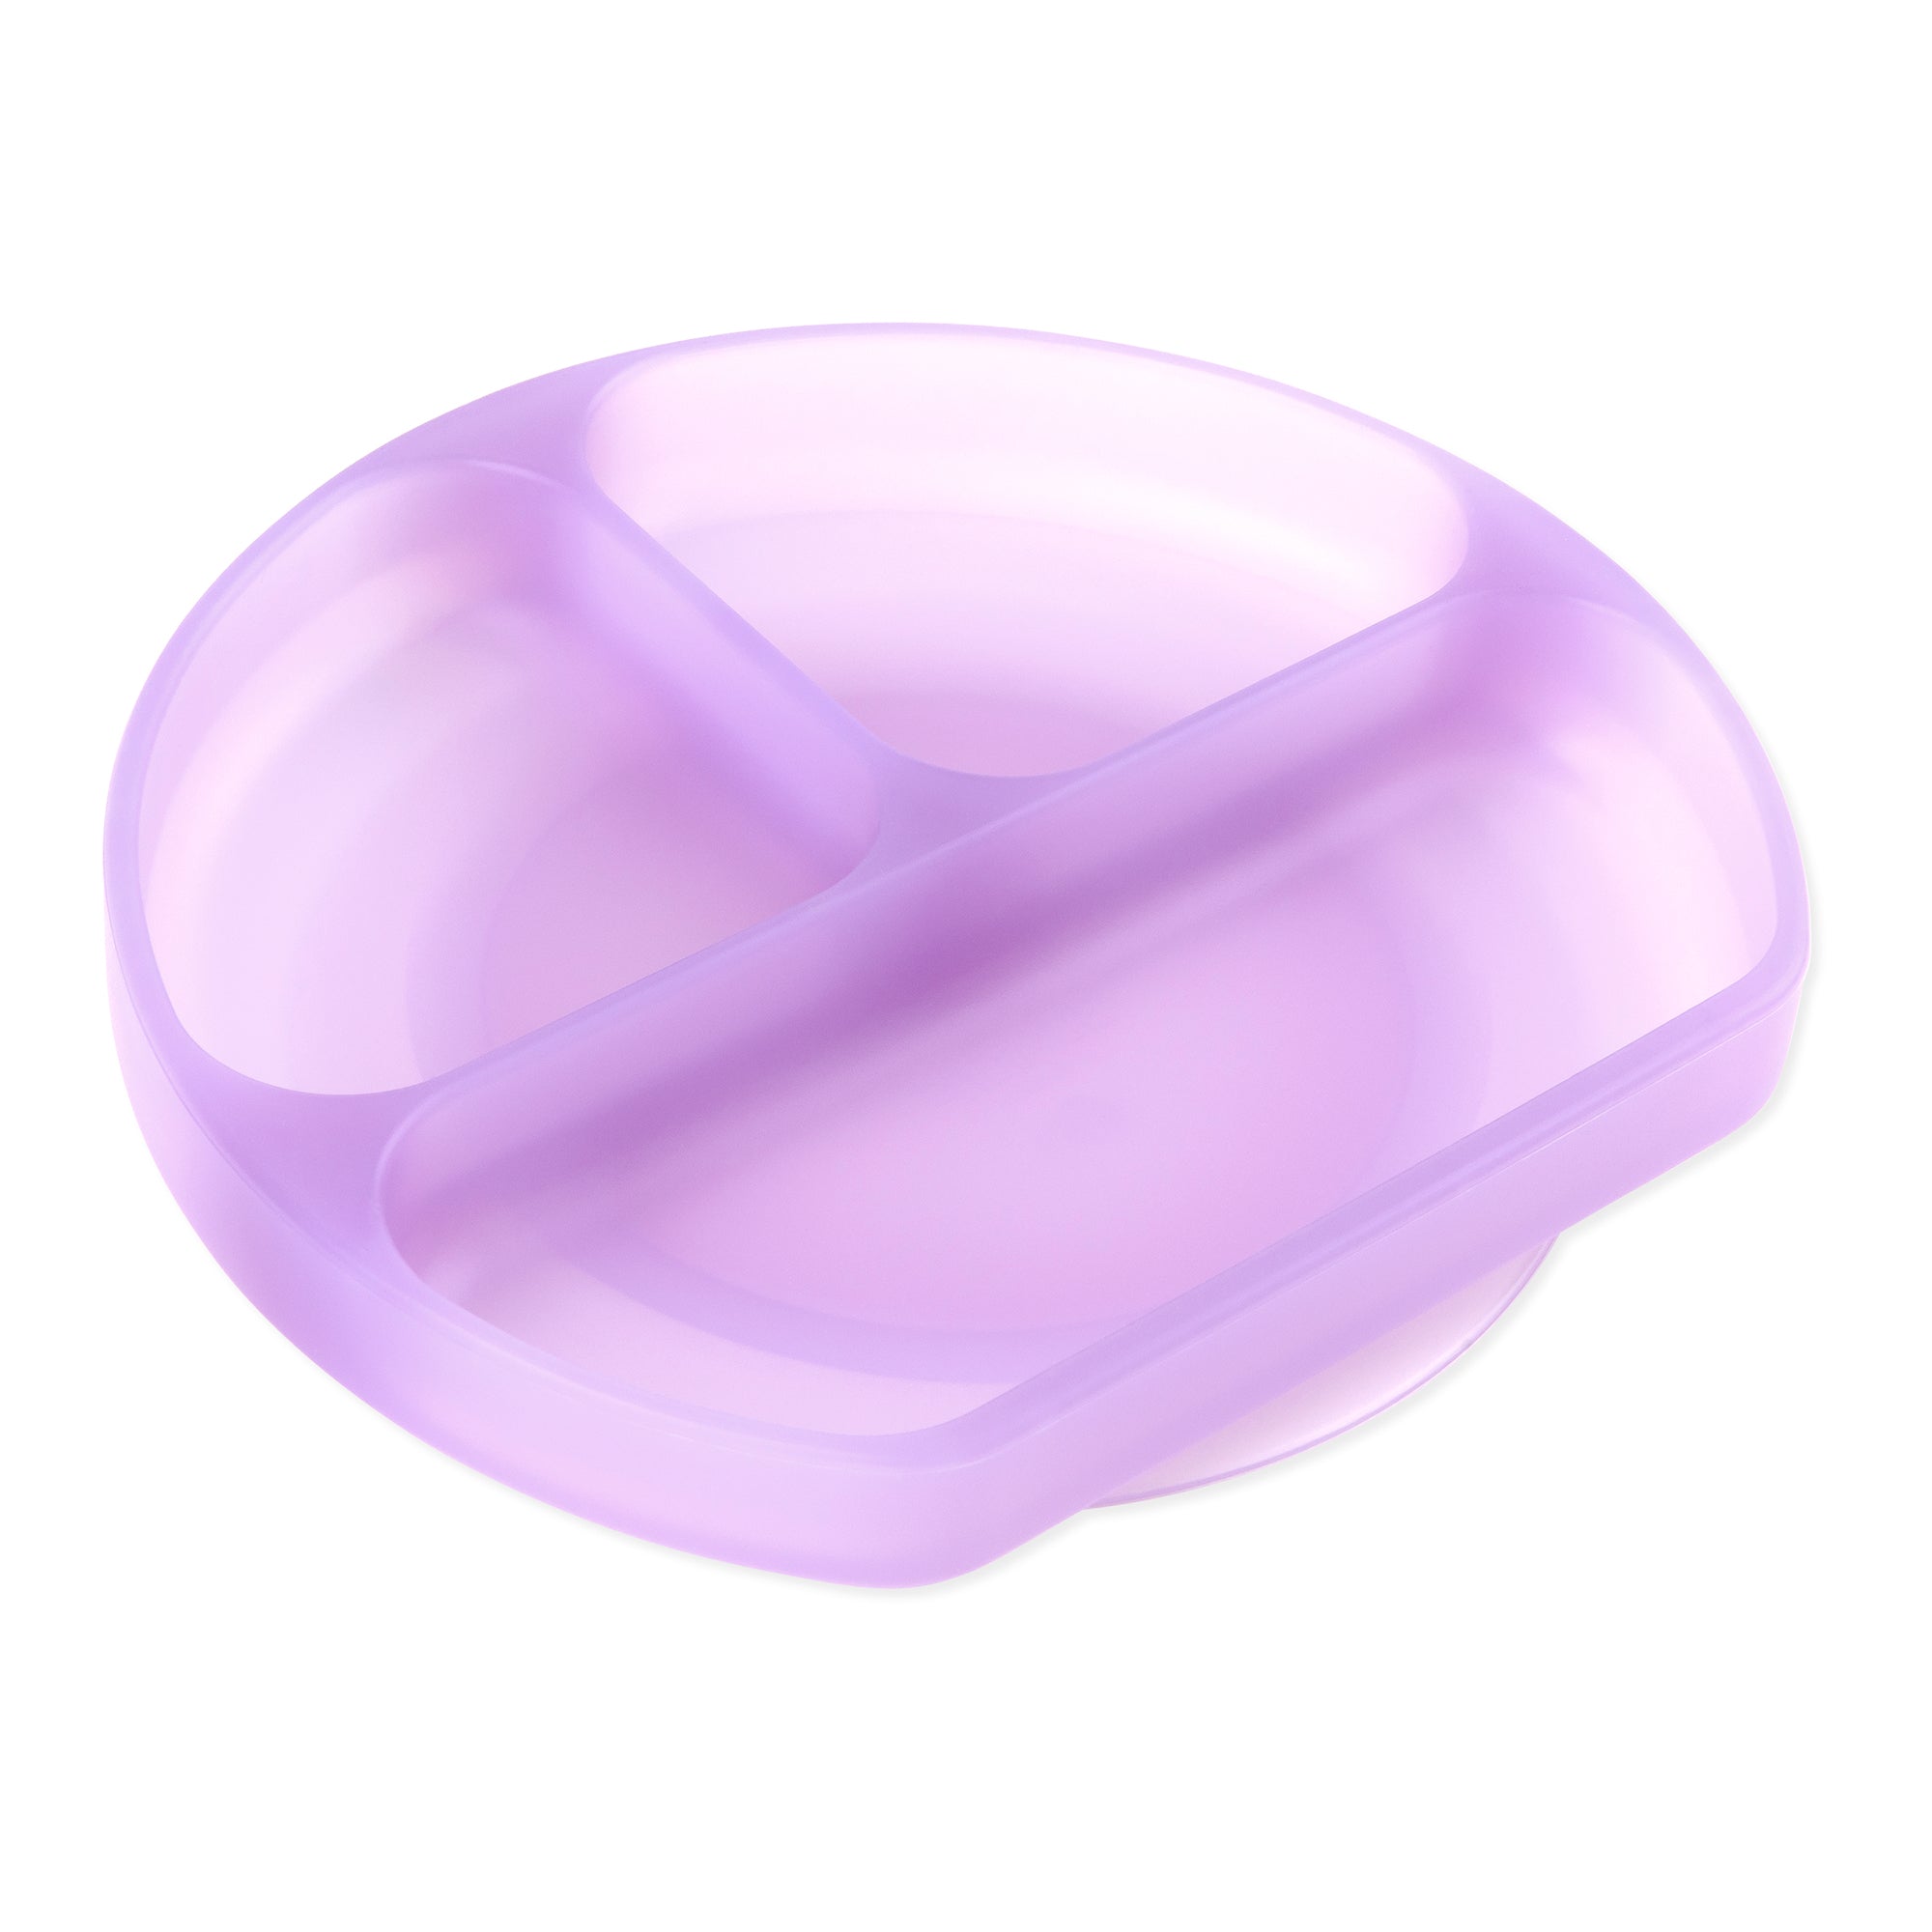 Silicone Grip Dish: Purple Jelly